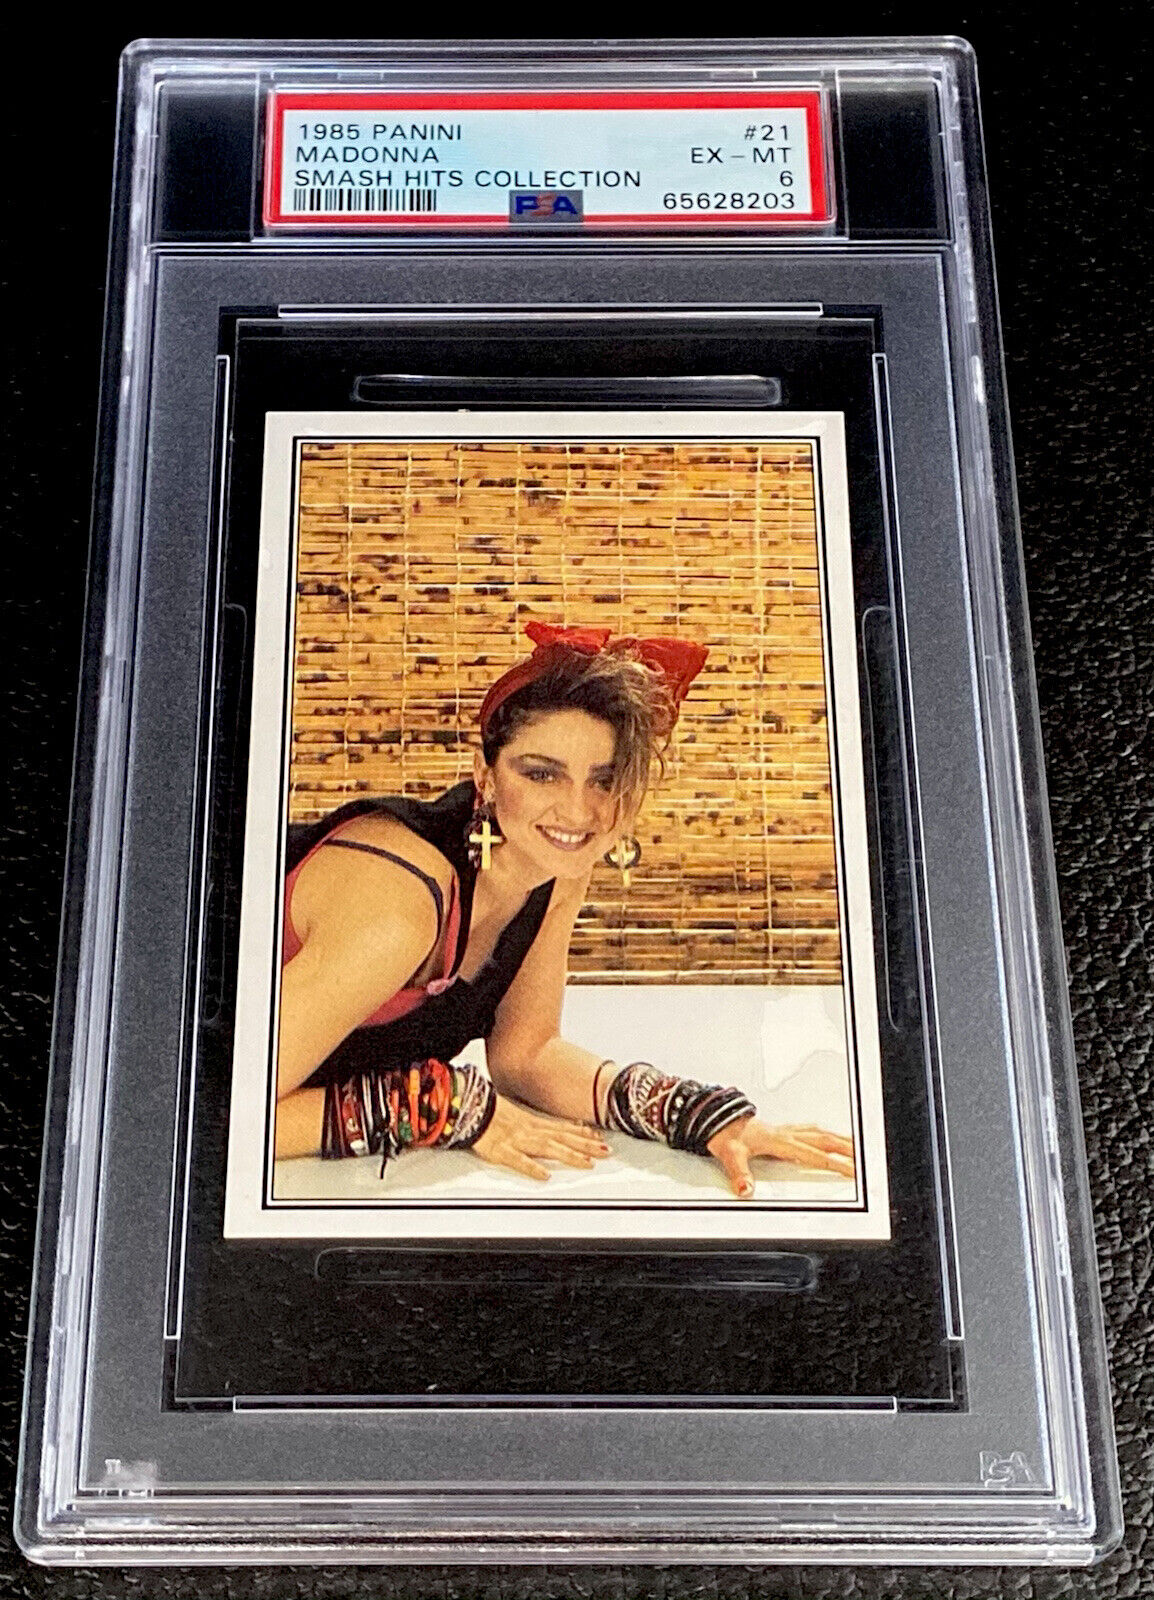 Madonna Rookie Card PSA 6 1985 Panini Smash Hits Collection Low Pop Music HOF 21